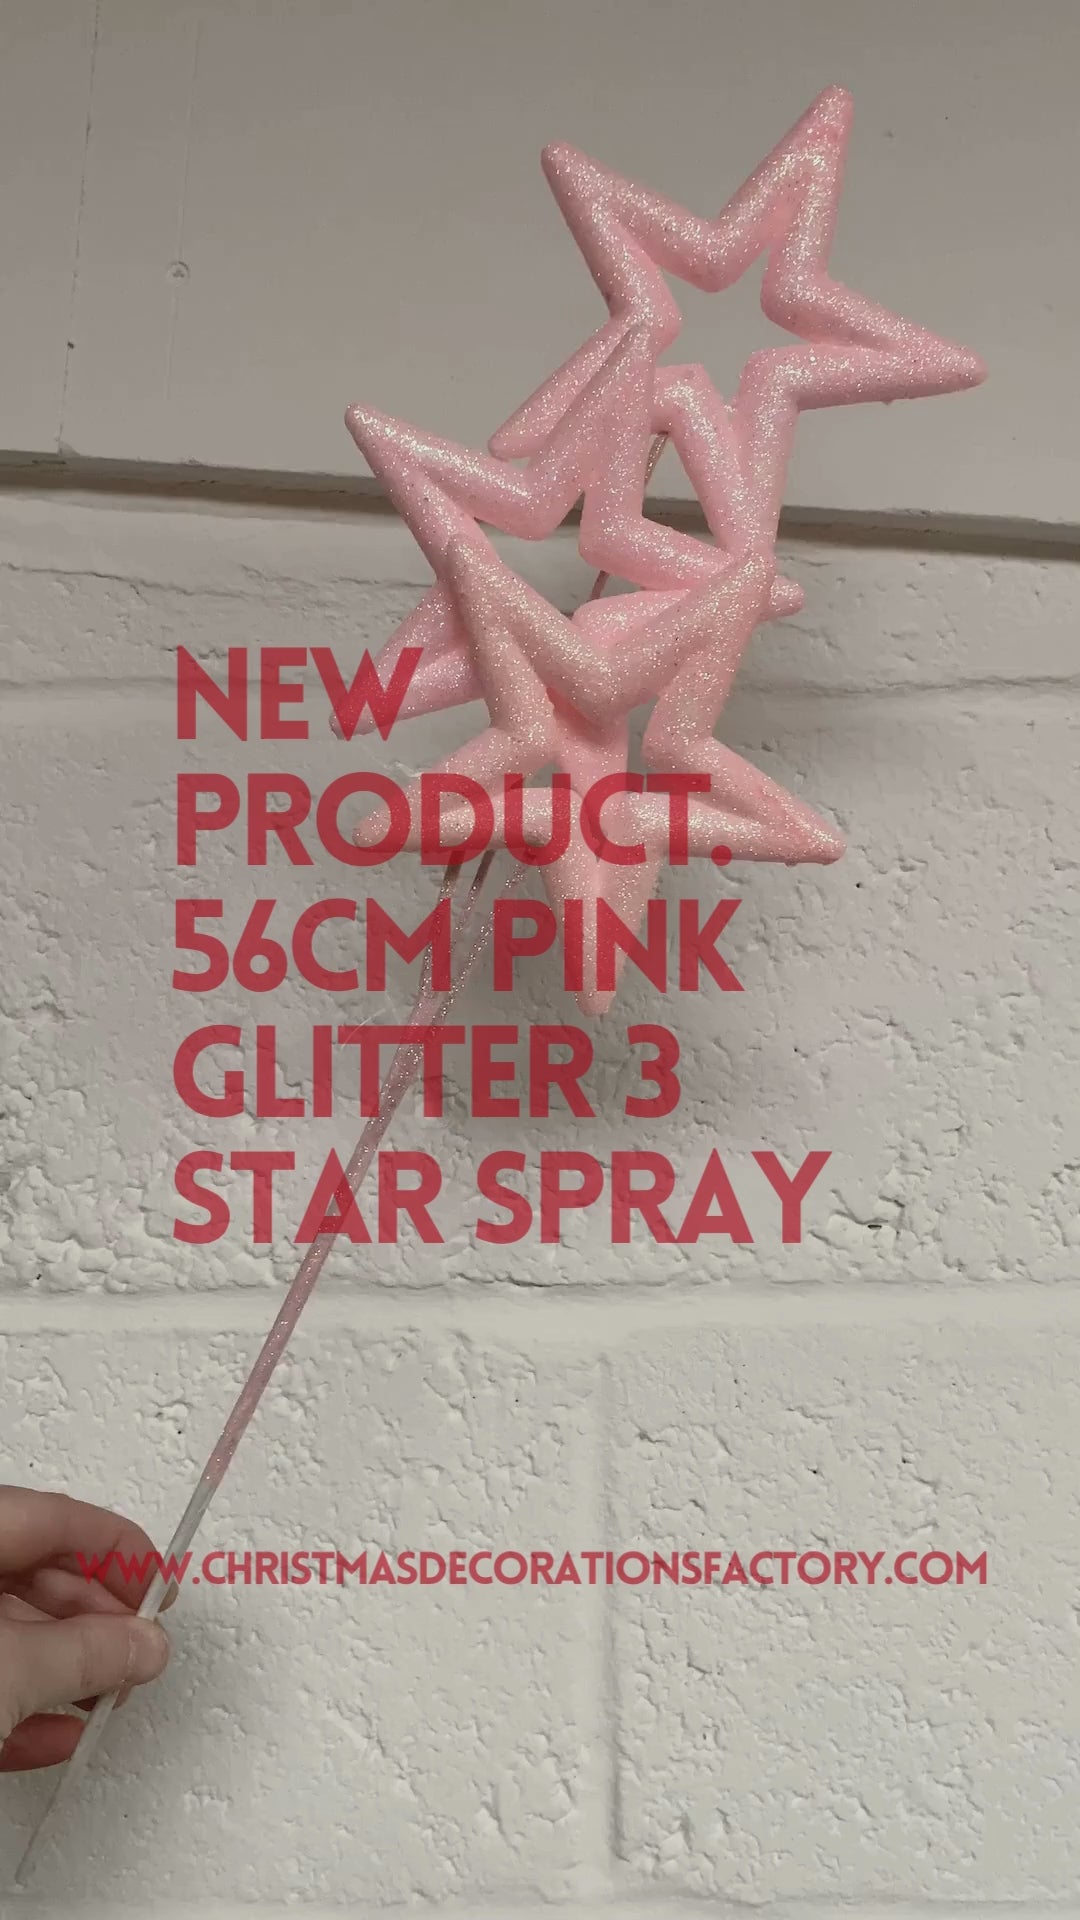 56cm Pink Glitter 3 Star Spray